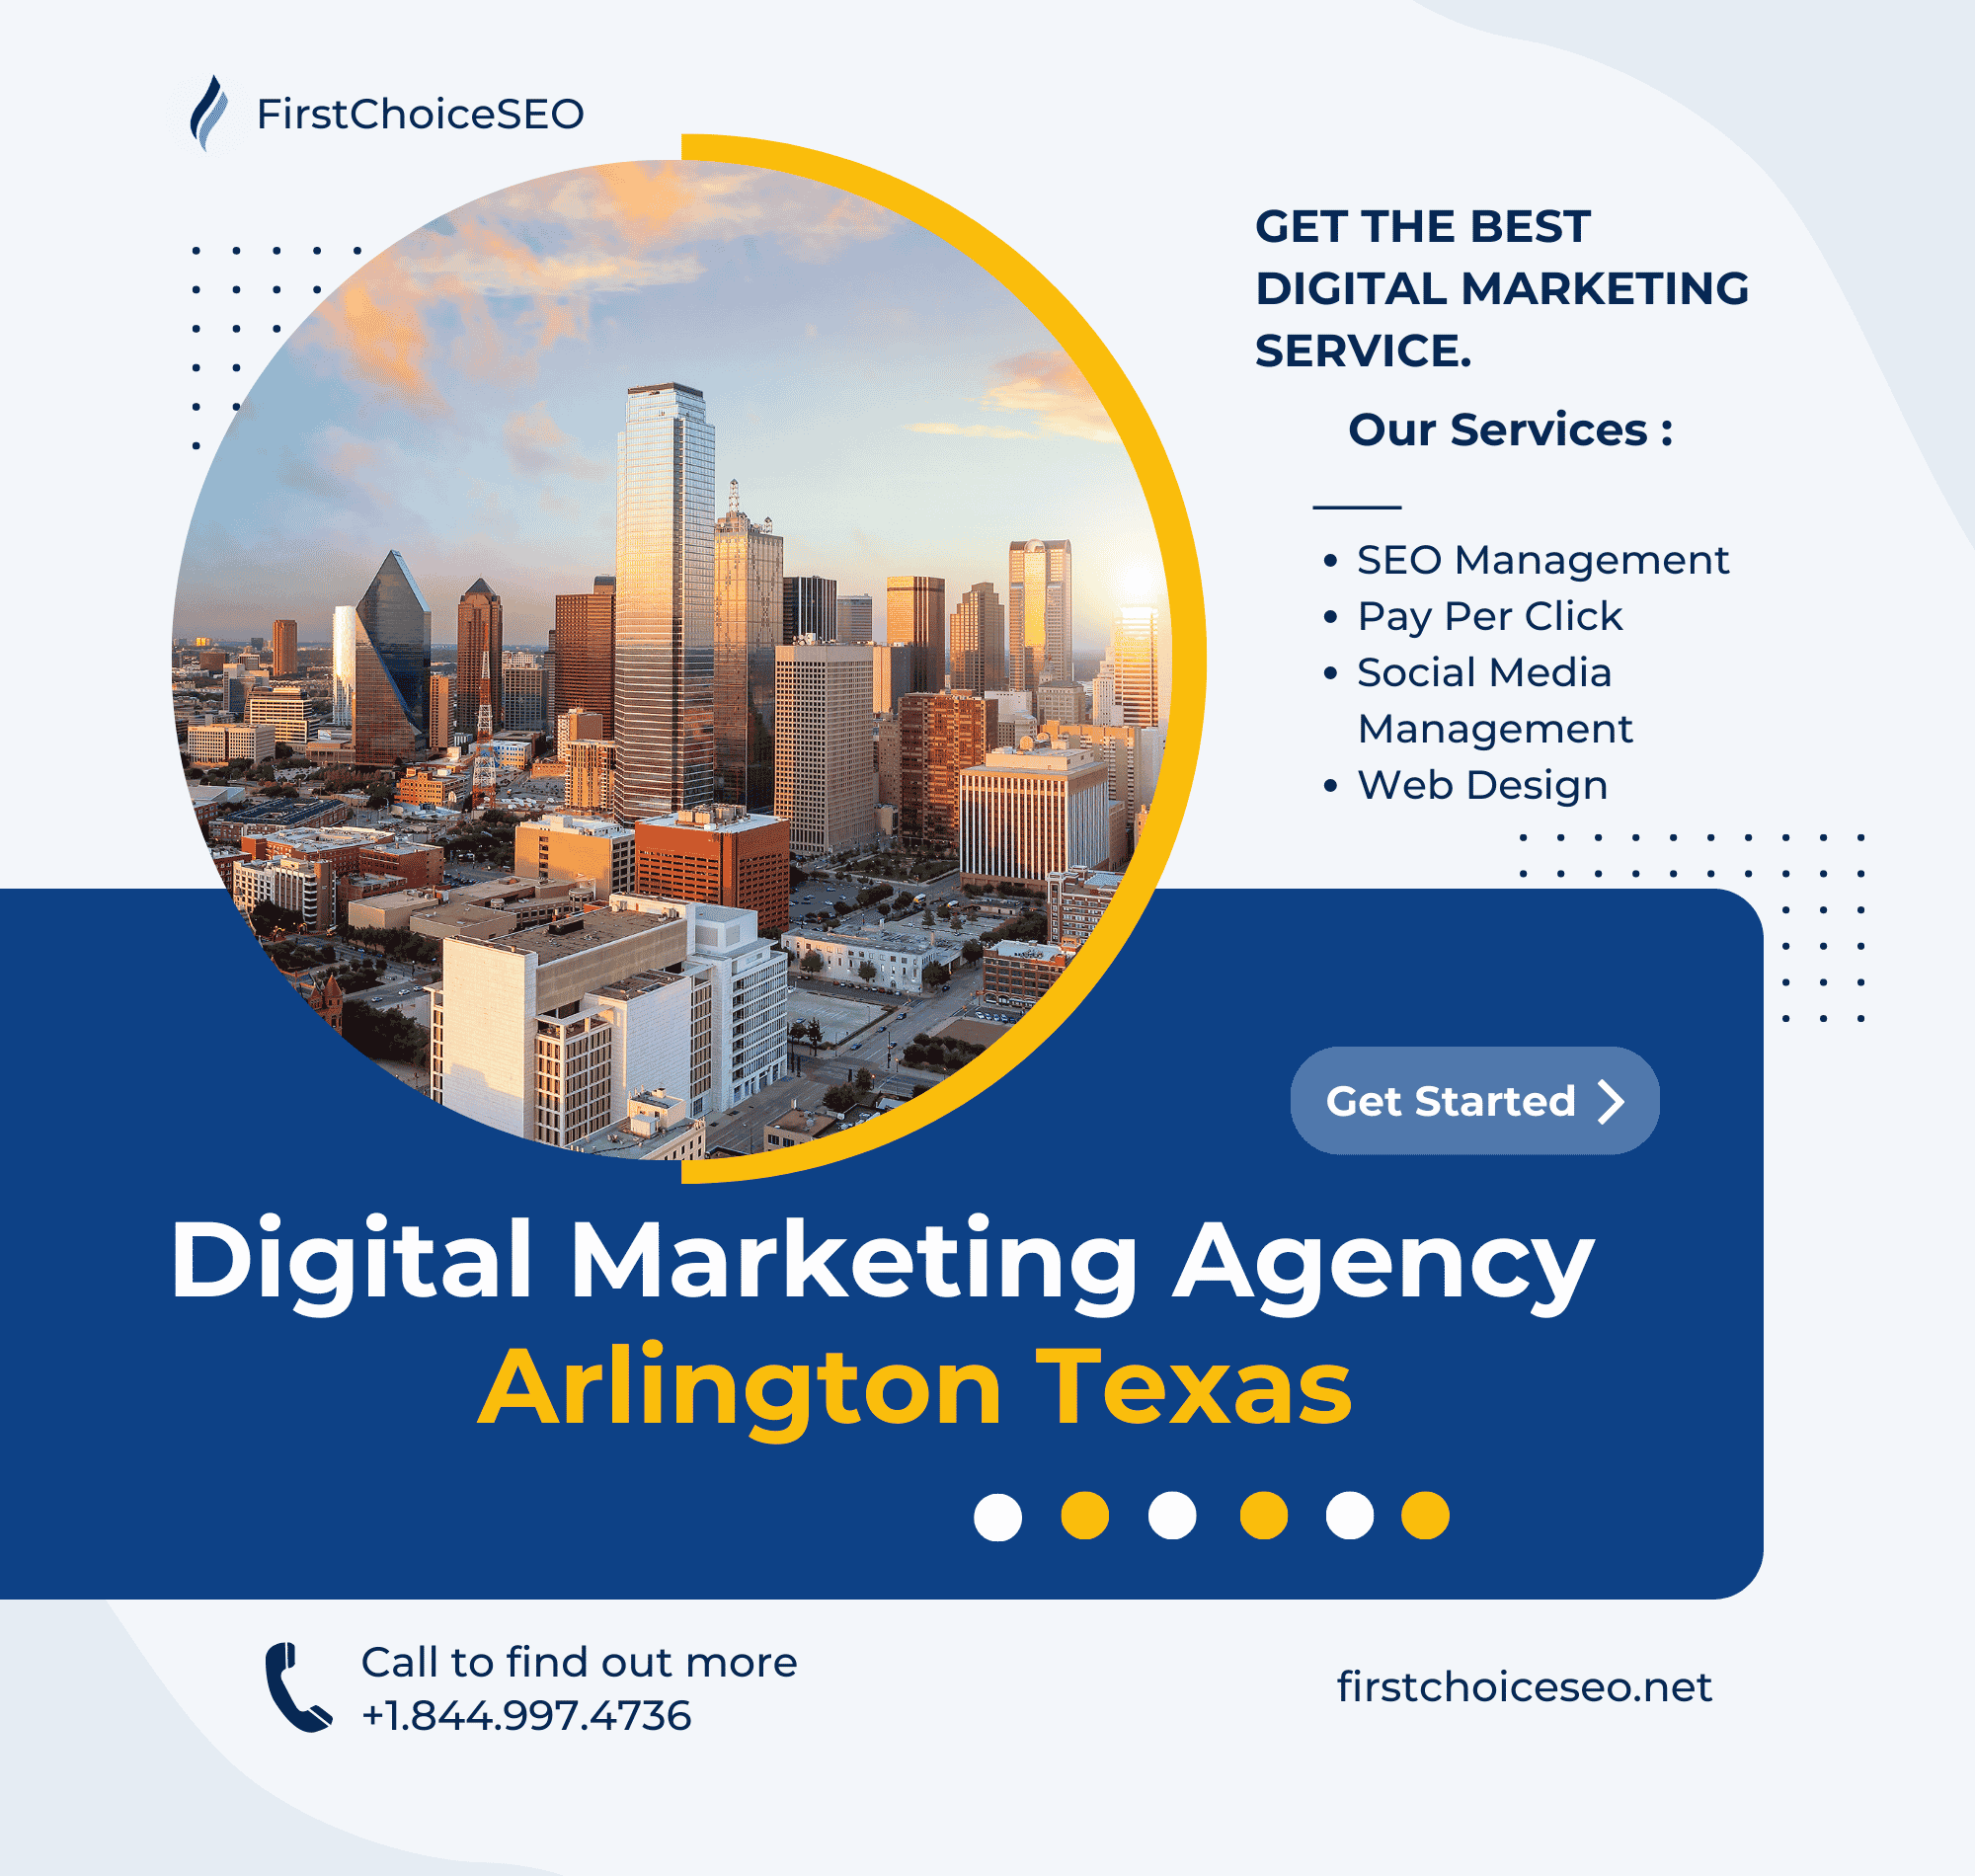 Digital Marketing Services in Arlington TX